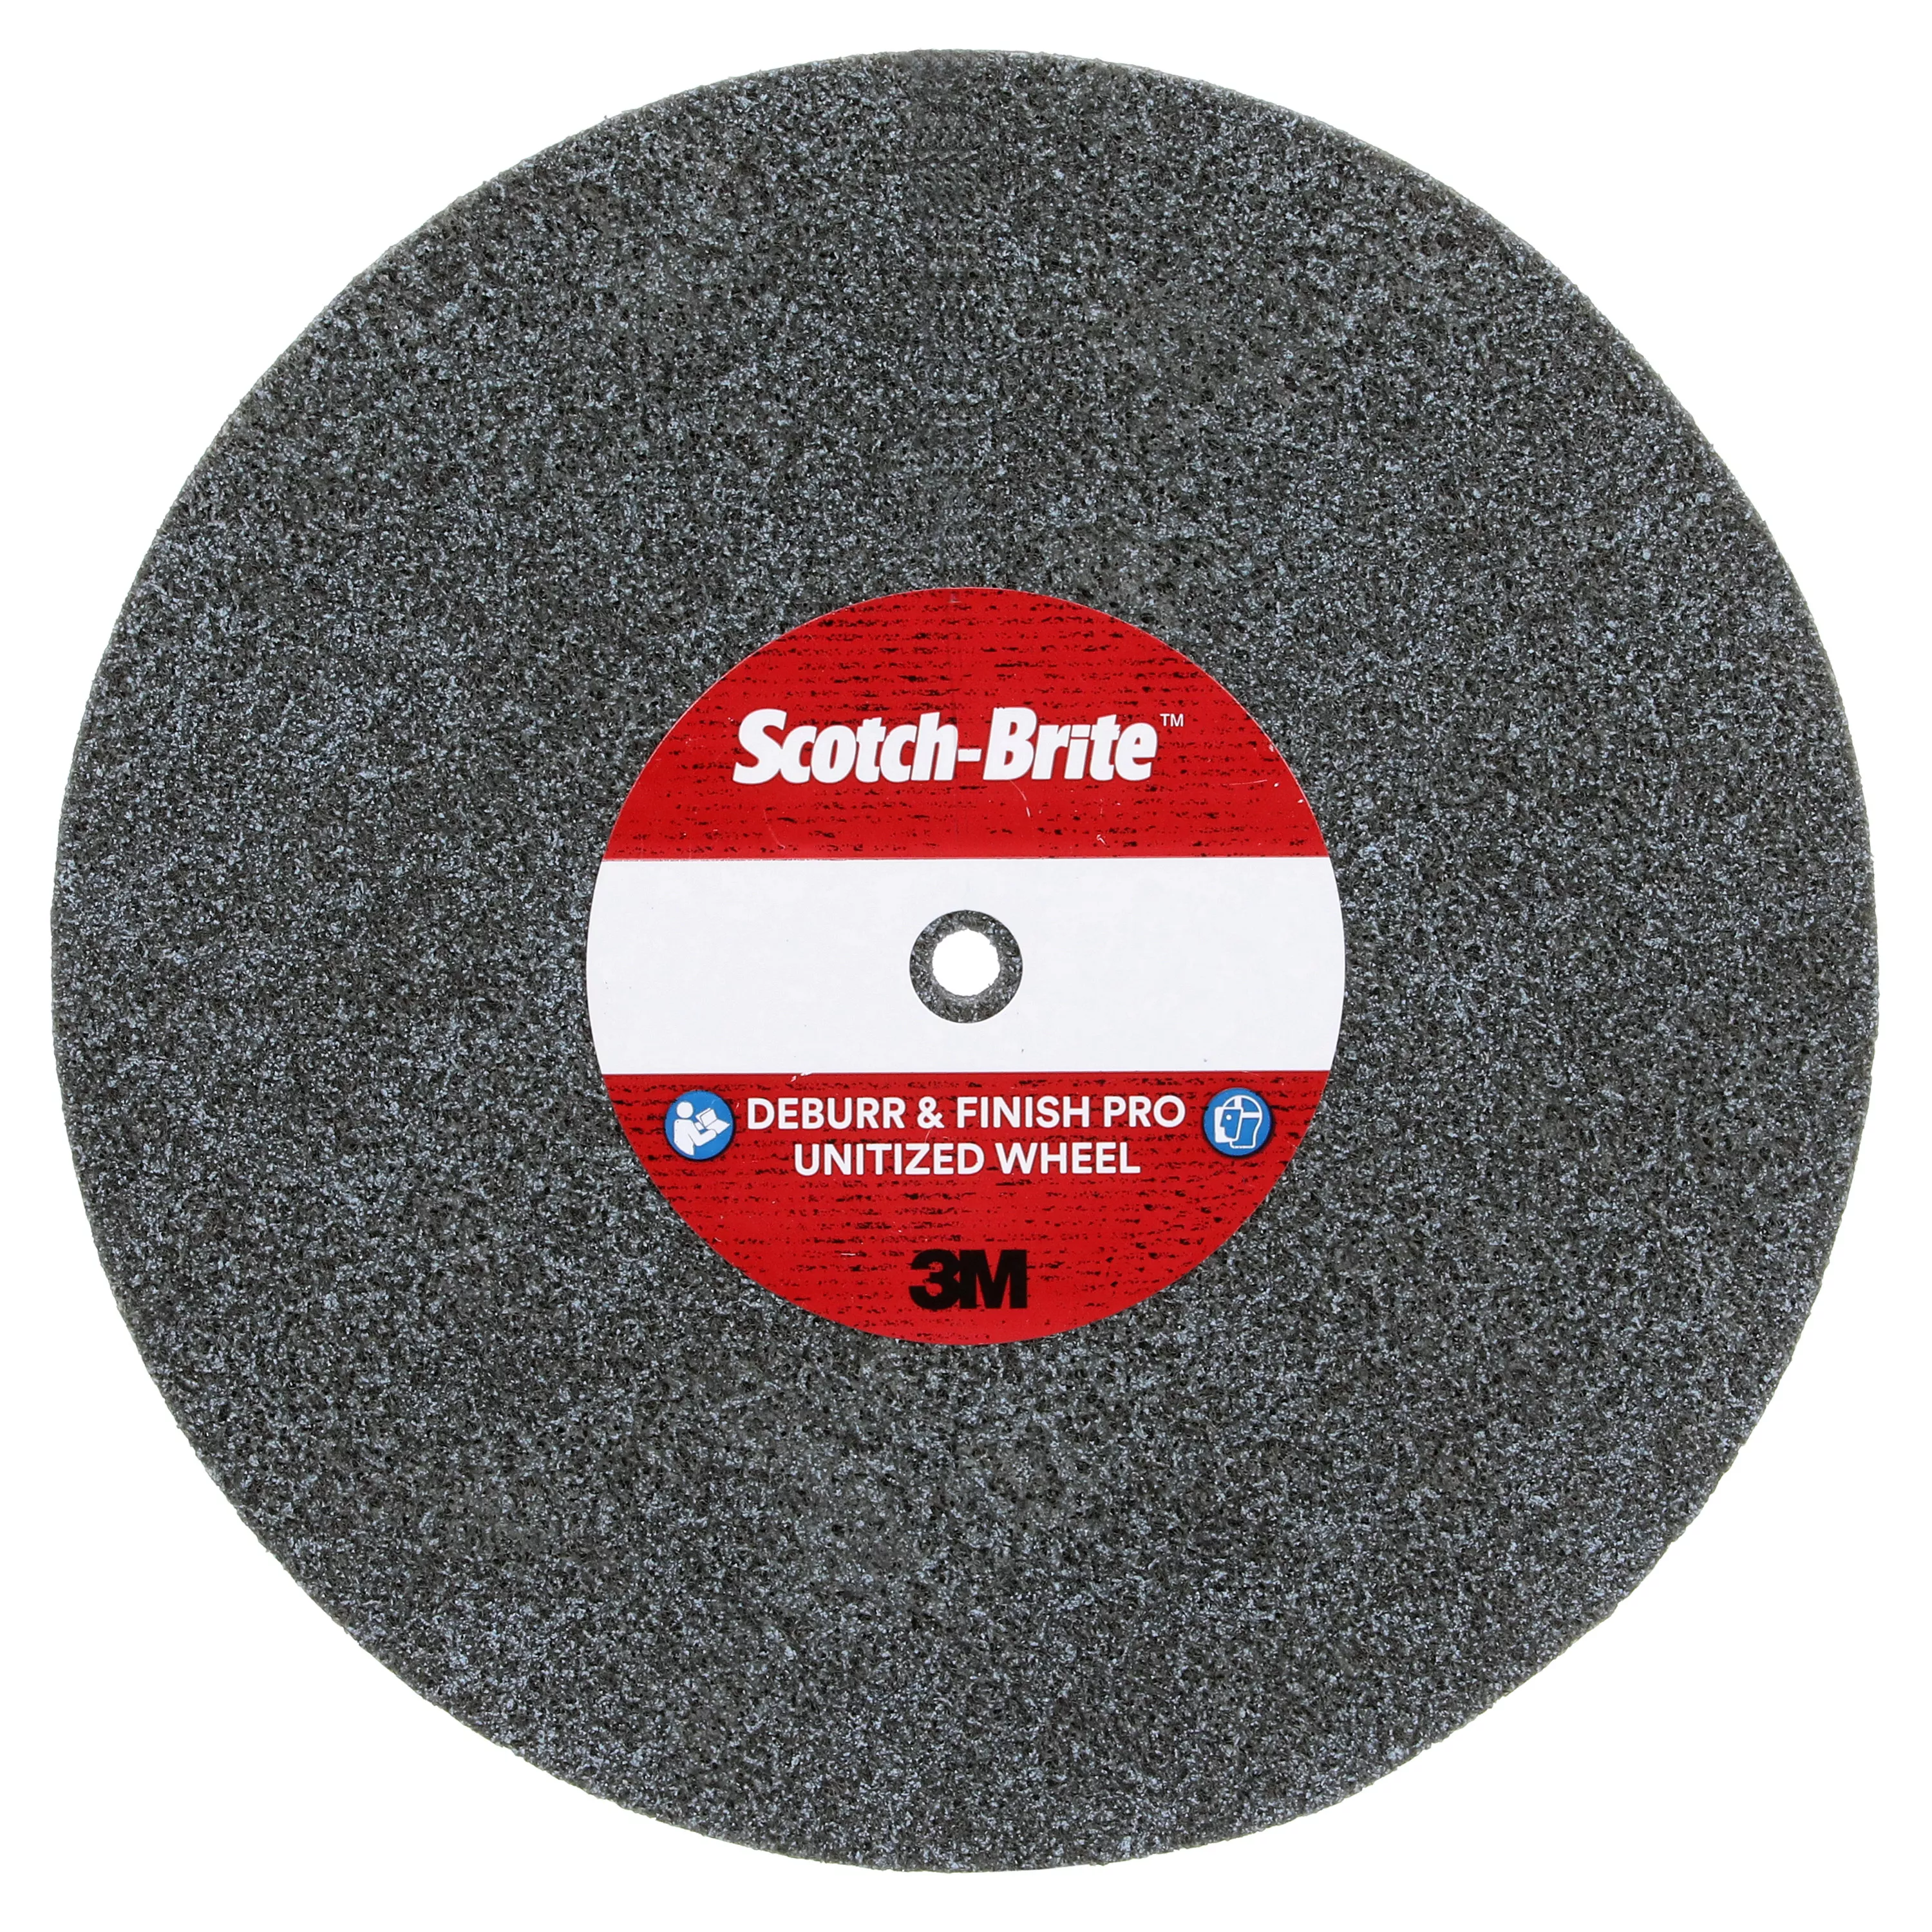 SKU 7010295273 | Scotch-Brite™ Deburr & Finish Pro Unitized Wheel